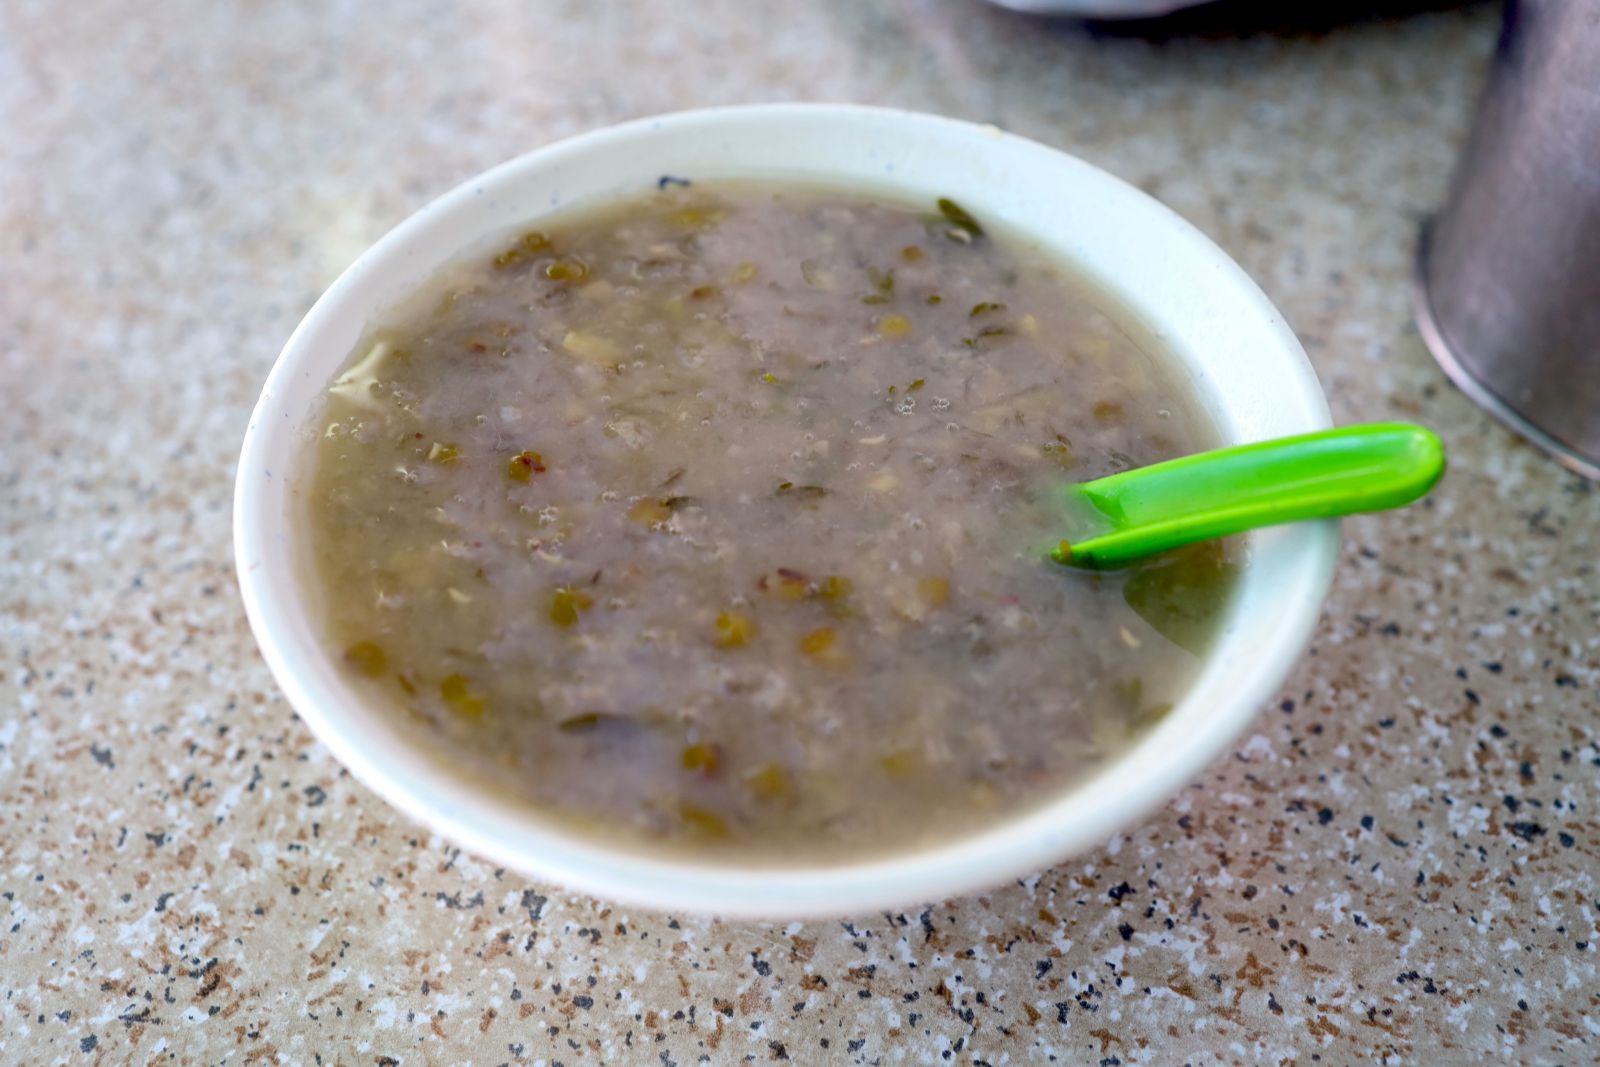 Cold Green Bean Soup With Seaweed (冷海帶綠豆湯)